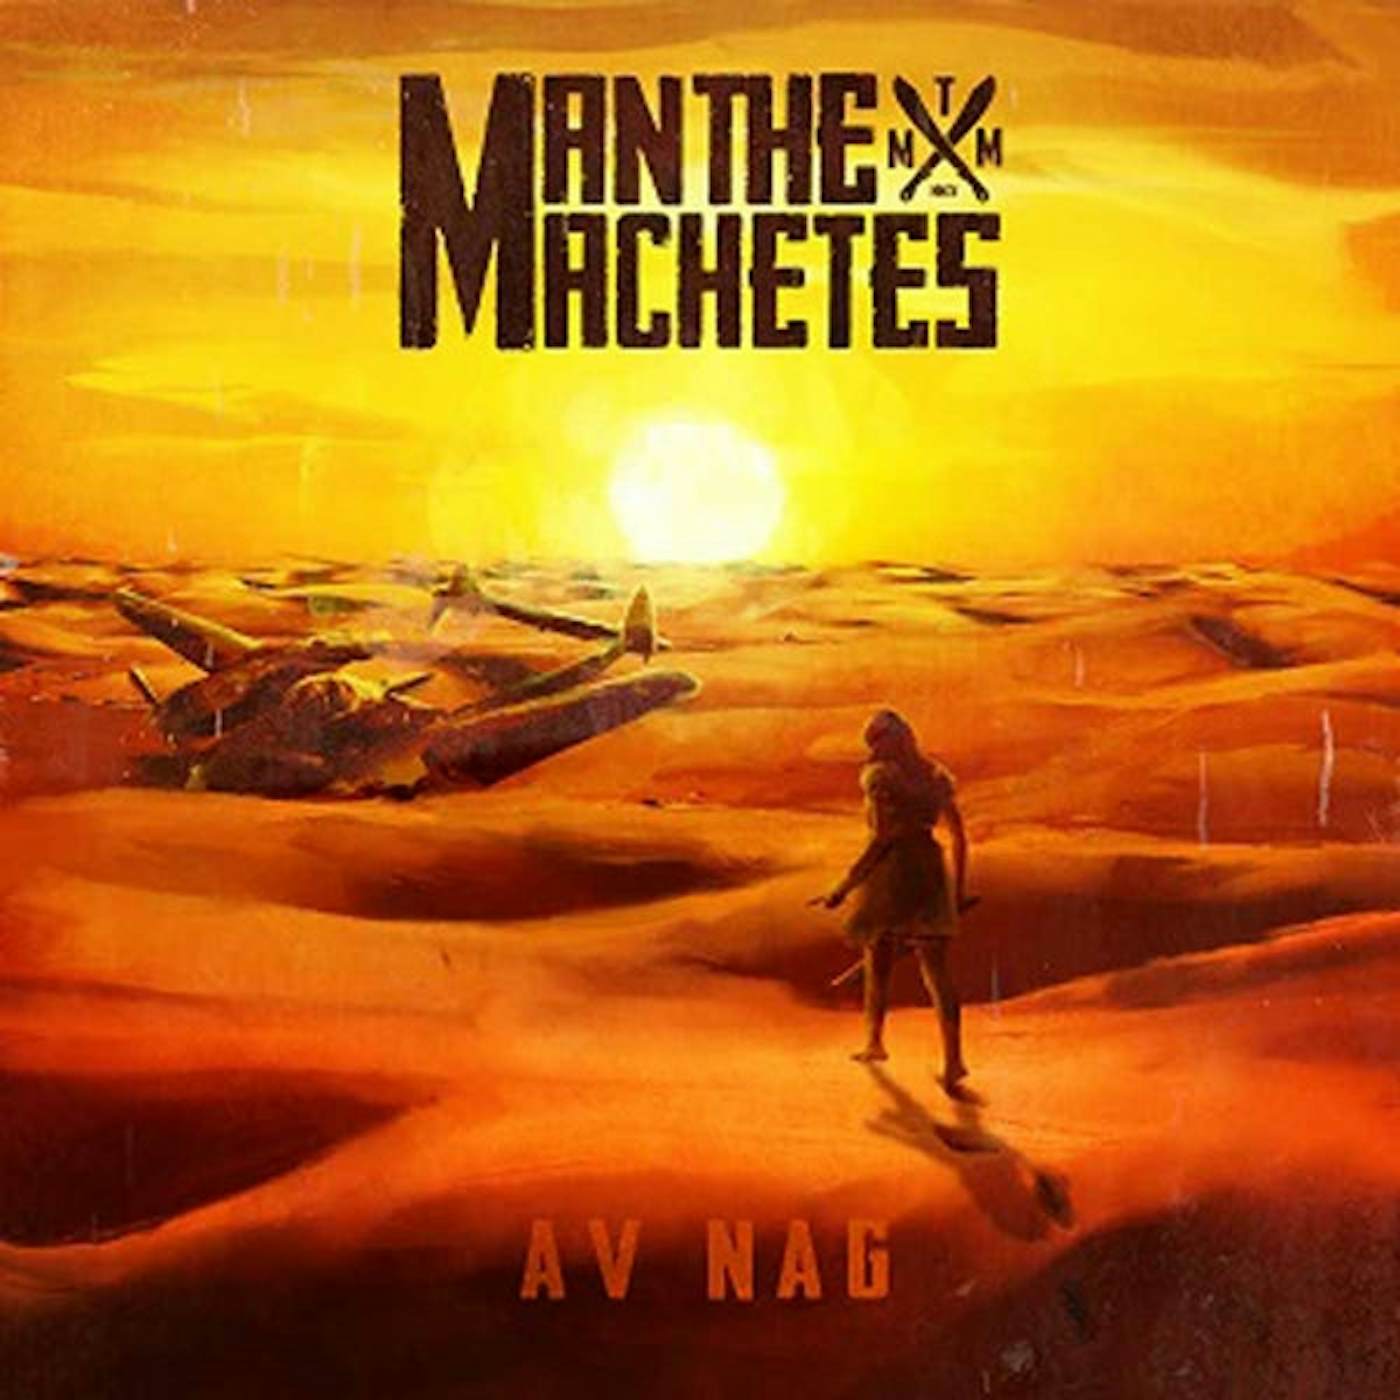 Man The Machetes CD - Av Nag